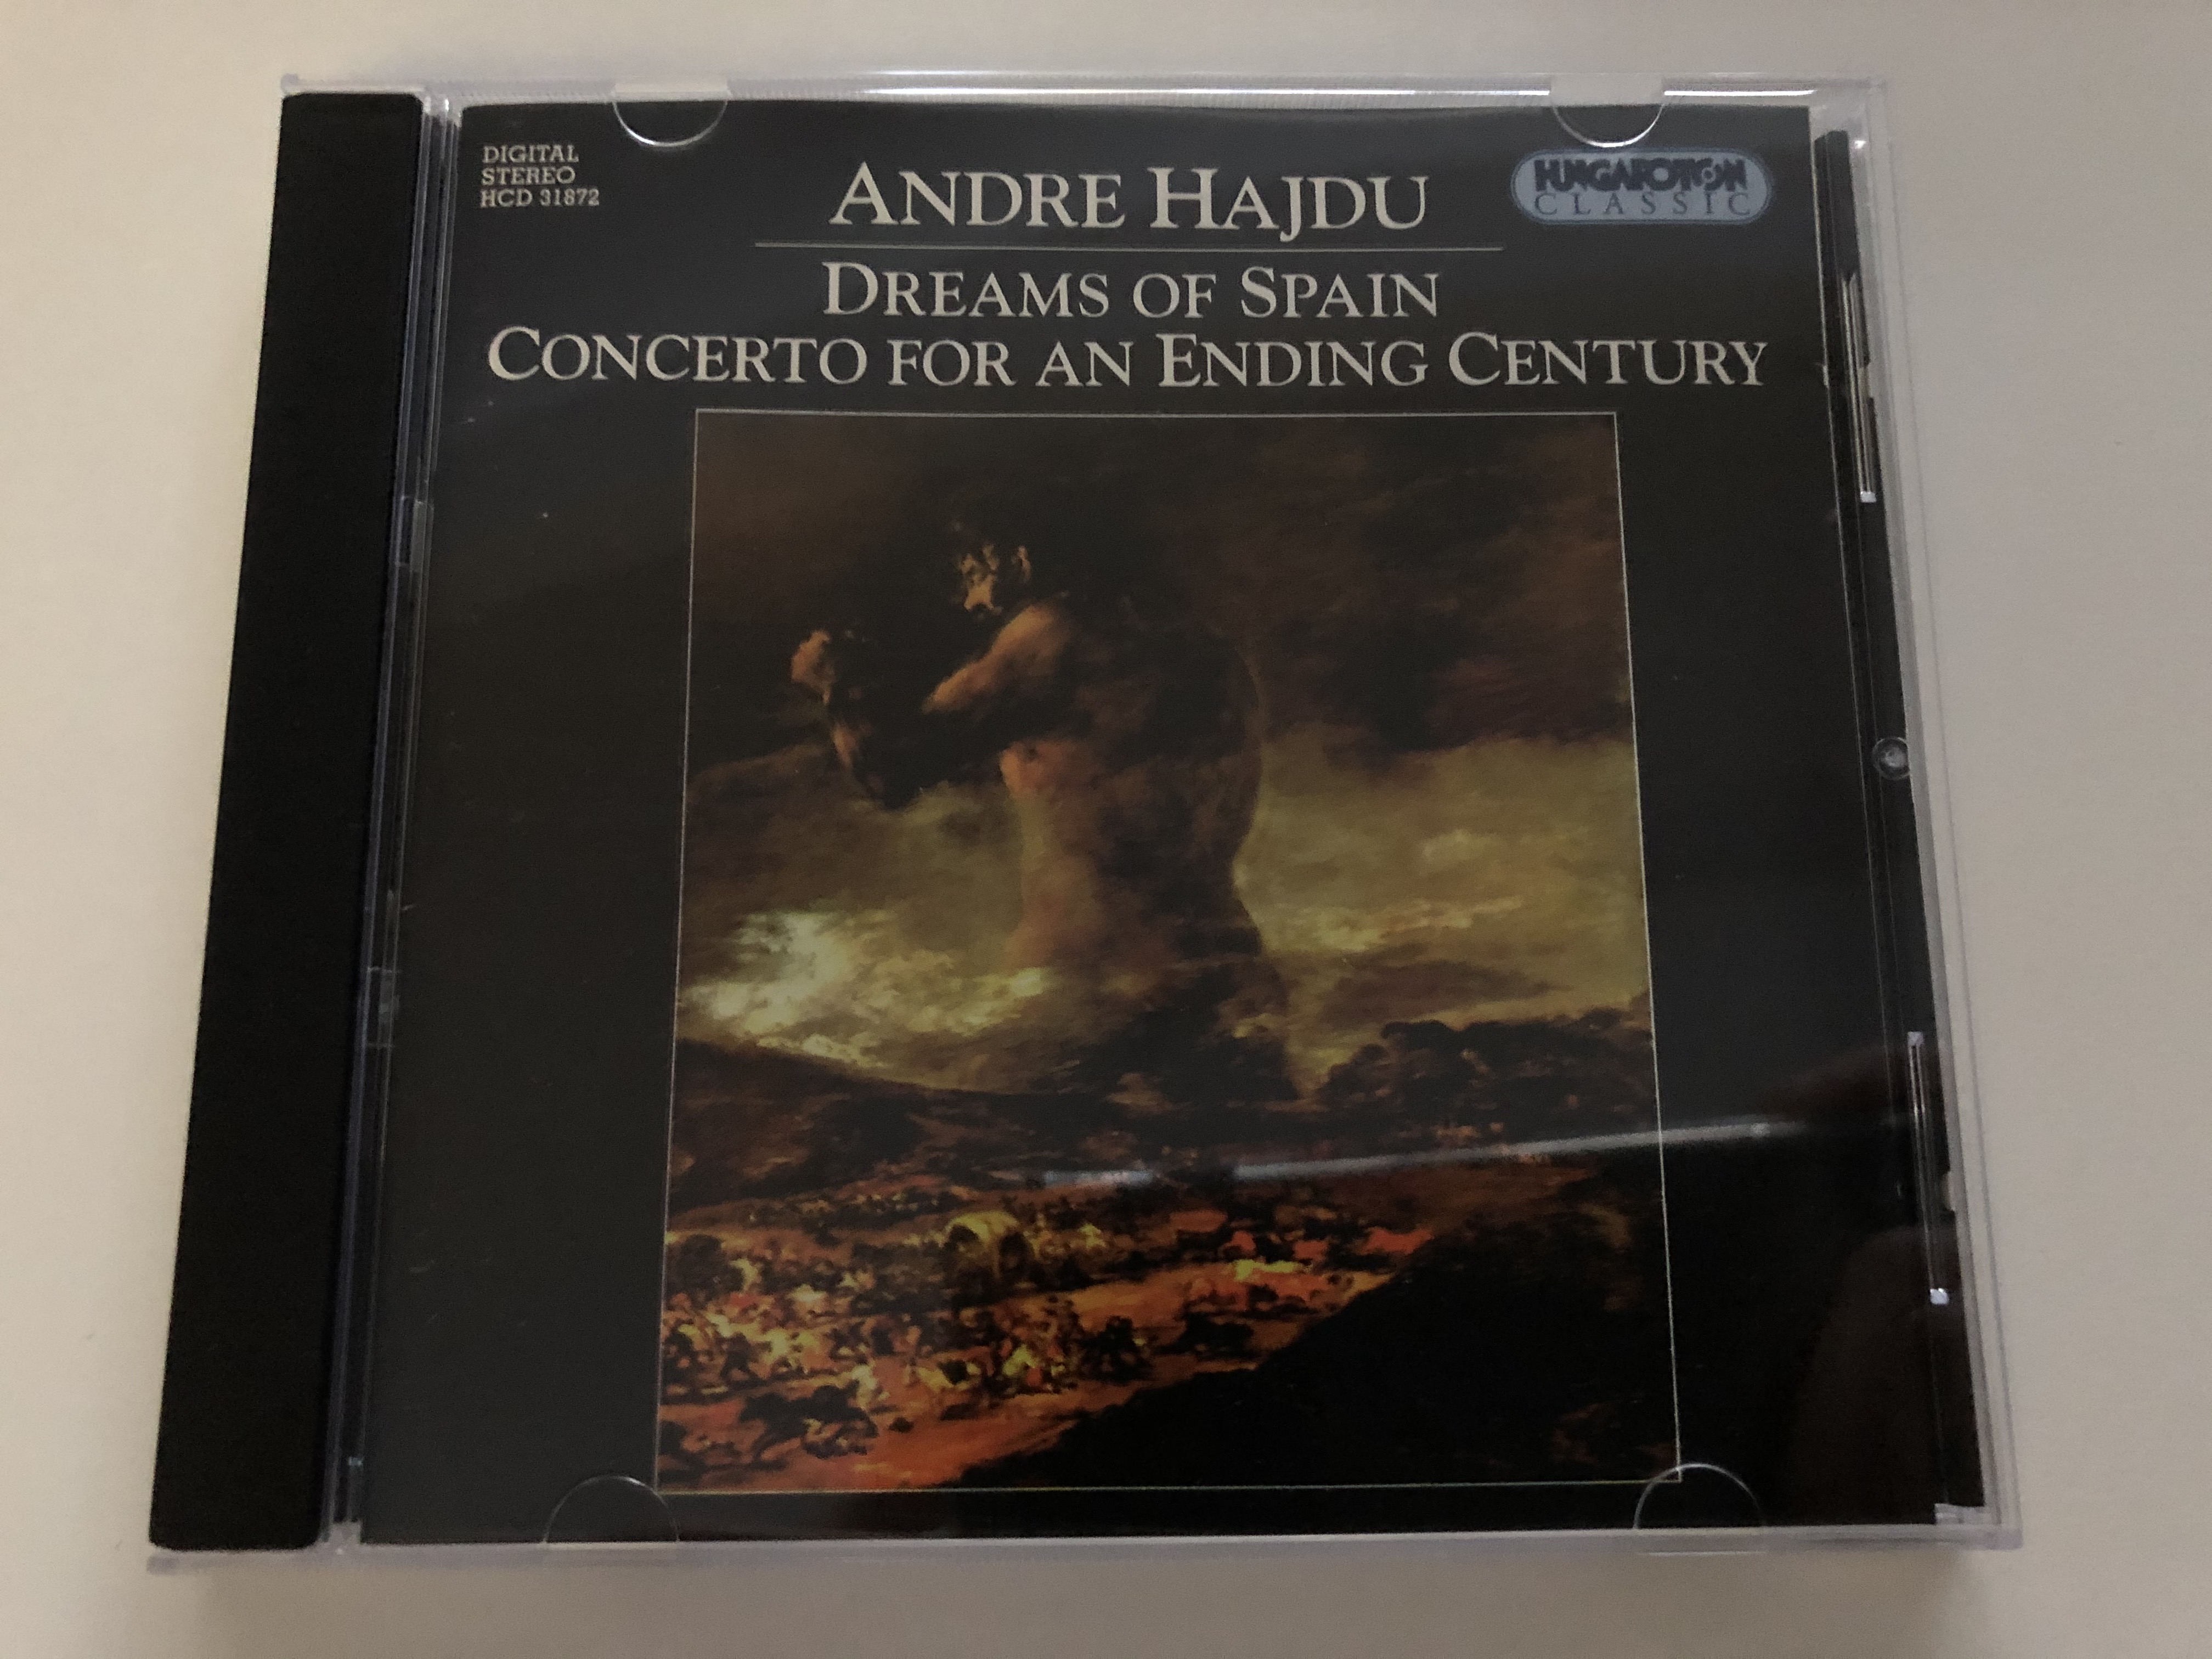 andre-hajdu-dreams-of-spain-concerto-for-an-ending-century-hungaroton-classic-audio-cd-1999-stereo-hcd-31872-1-.jpg